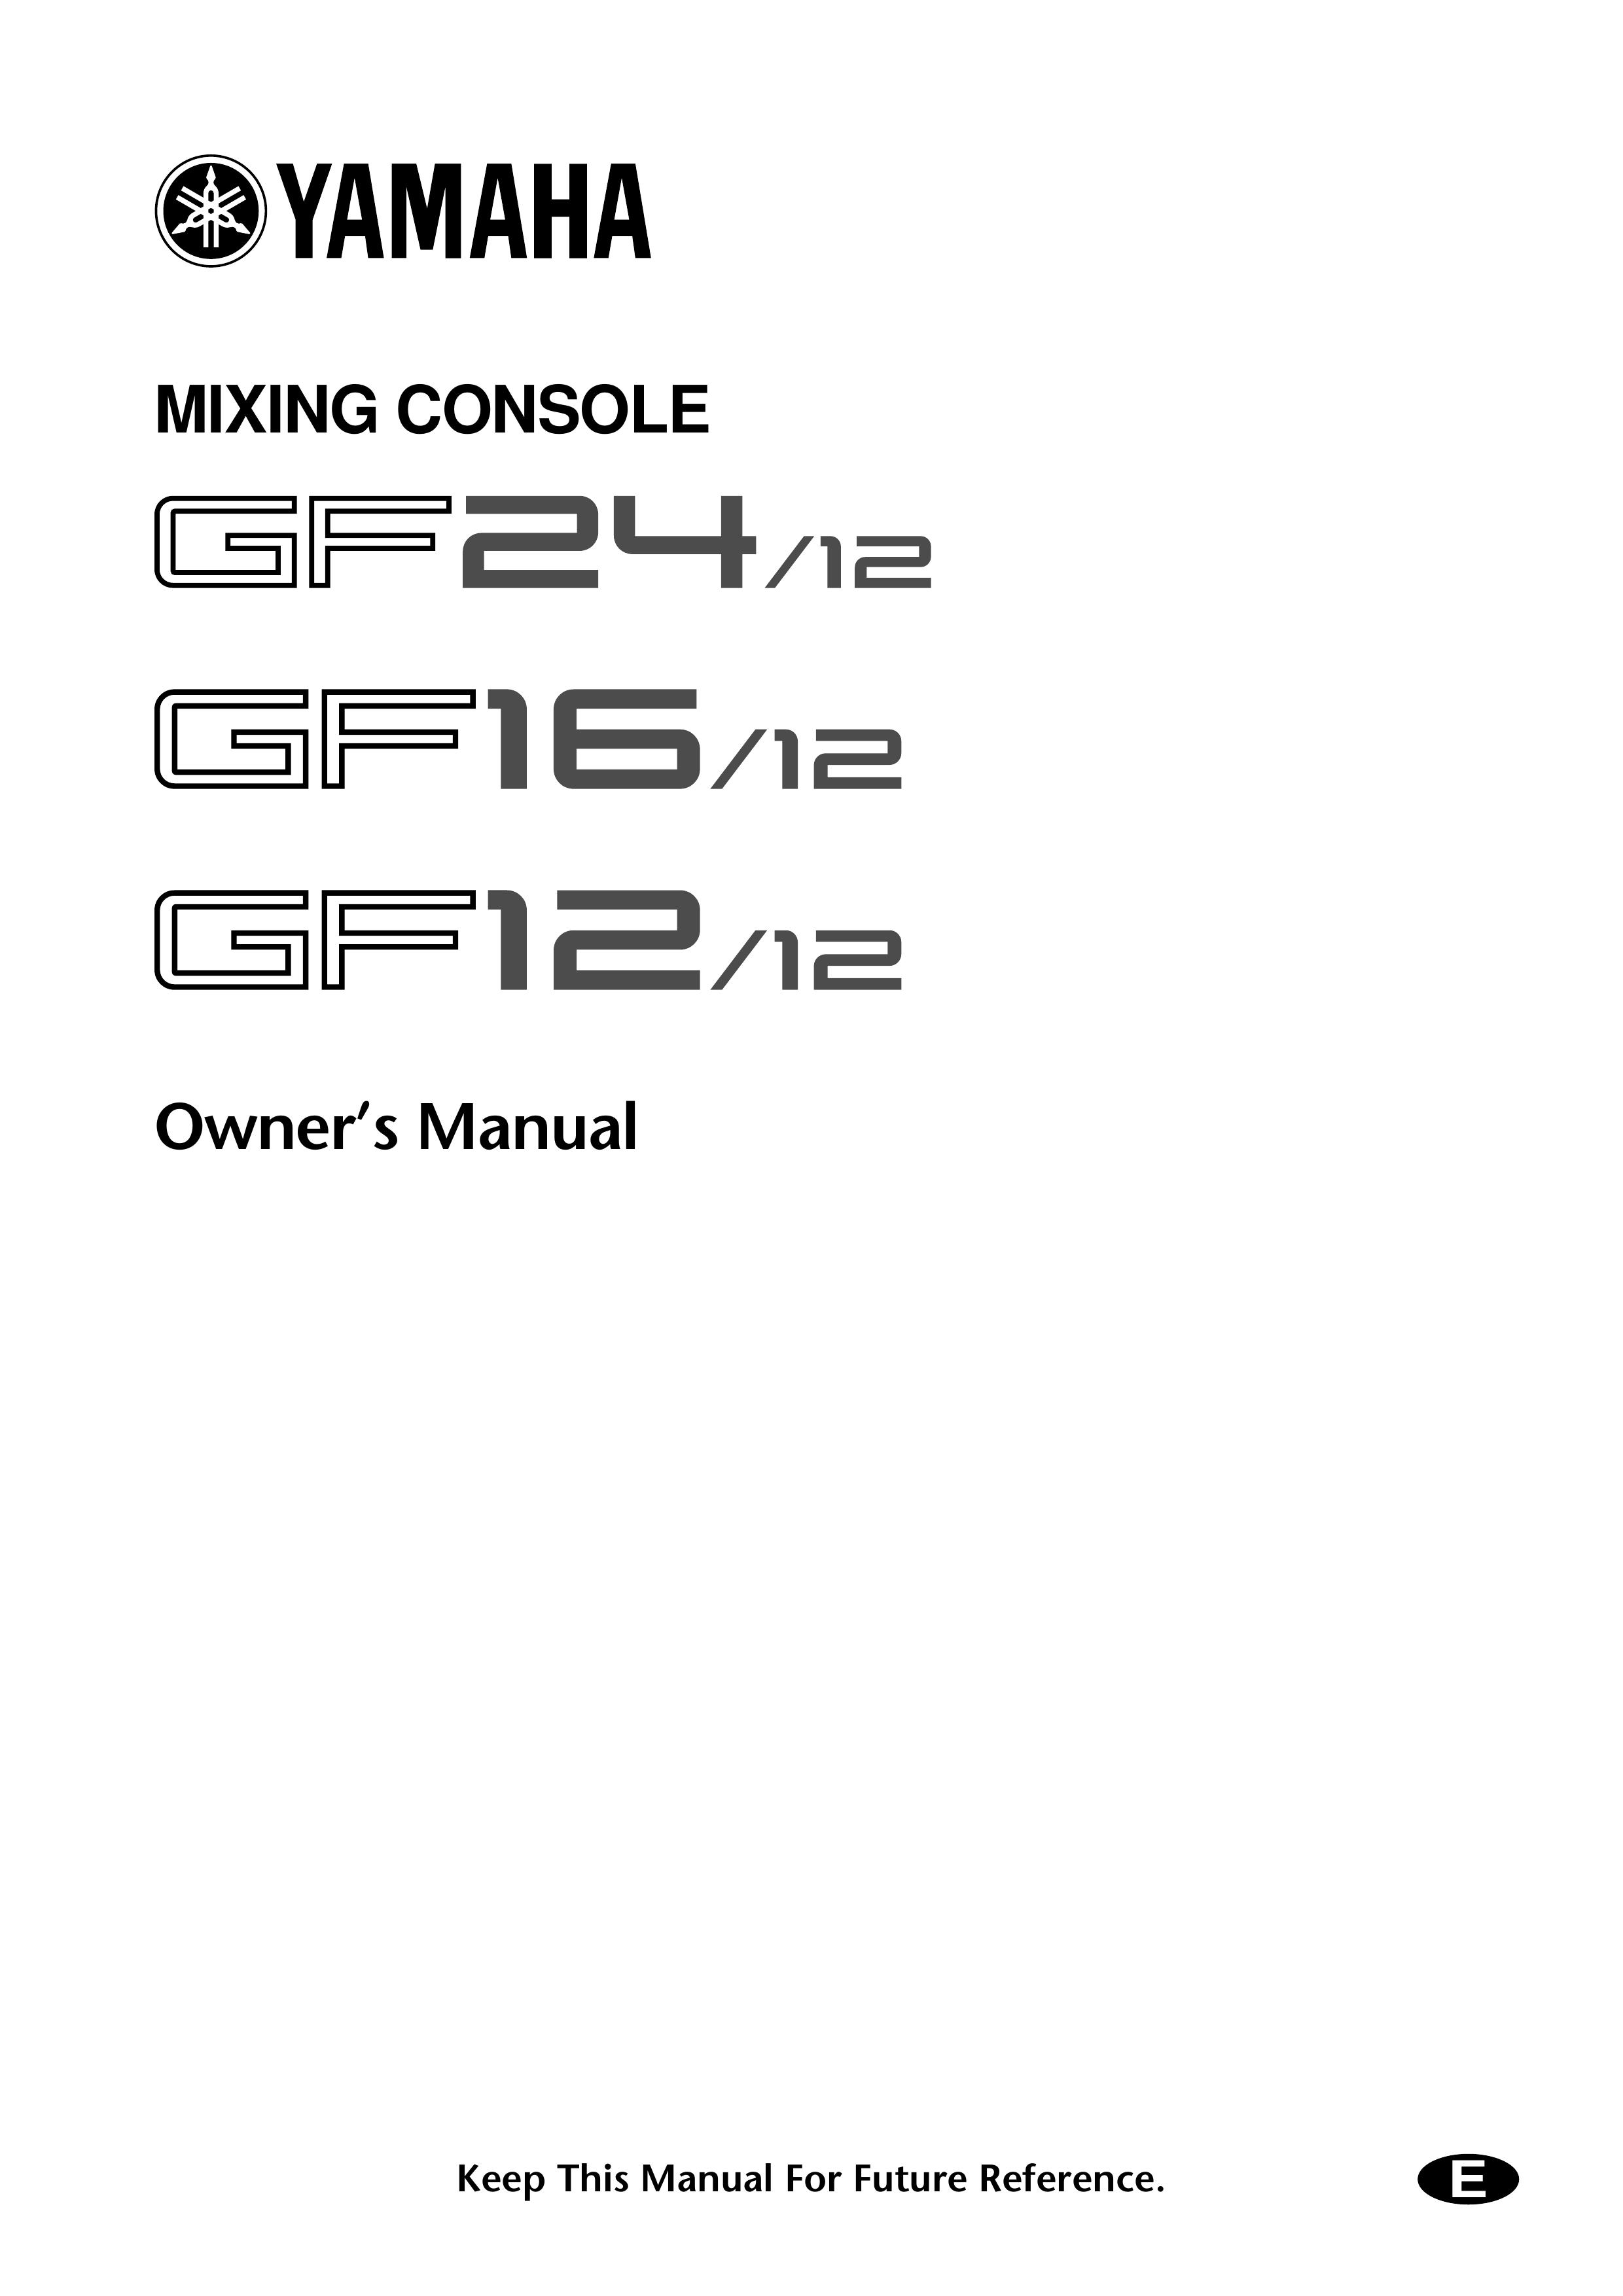 Yamaha GF12/12 DJ Equipment User Manual